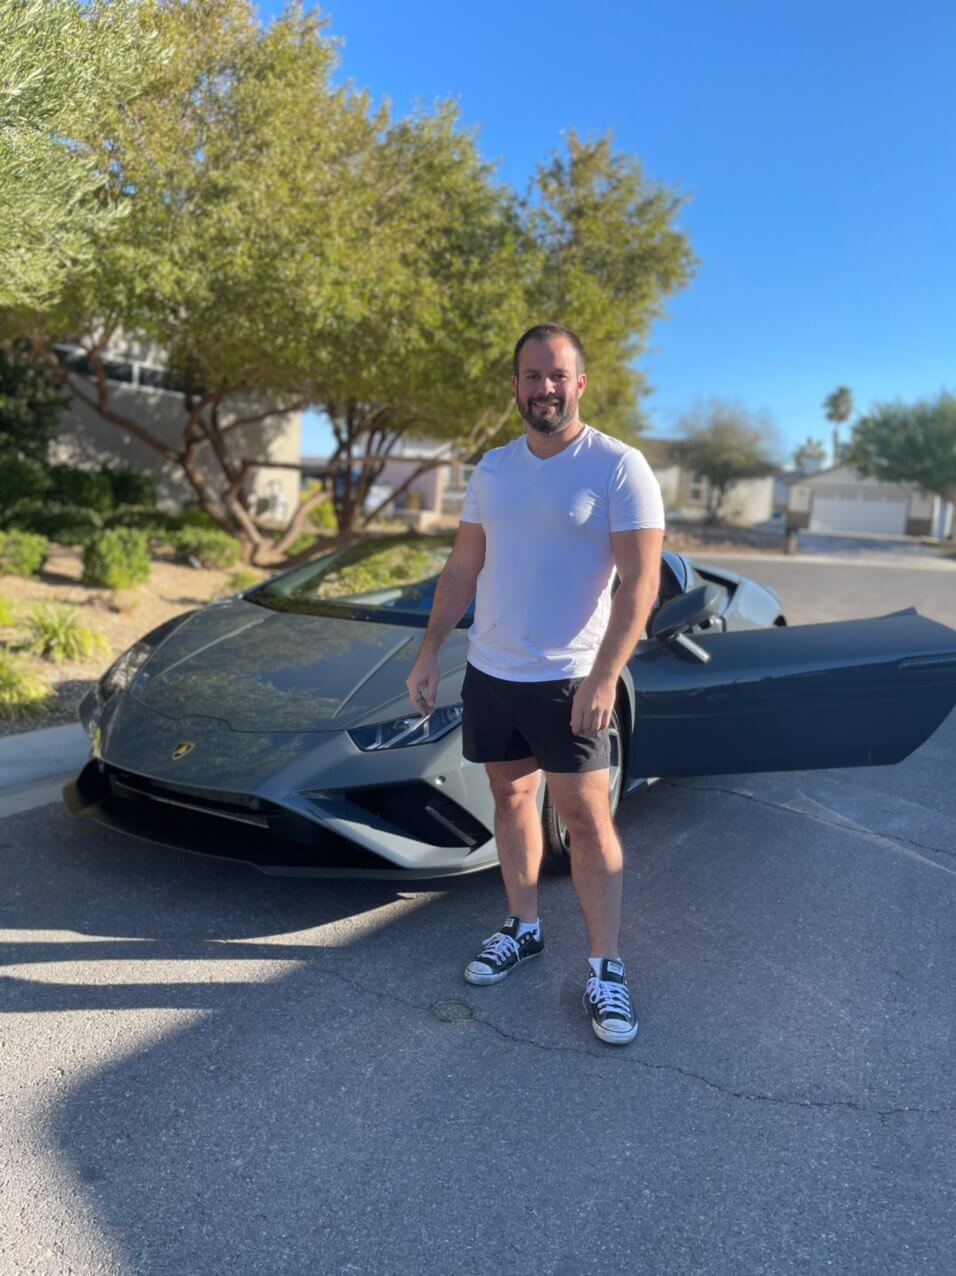 Ryan Fee trolls Daniel Negreanu with epic Lamborghini number plate